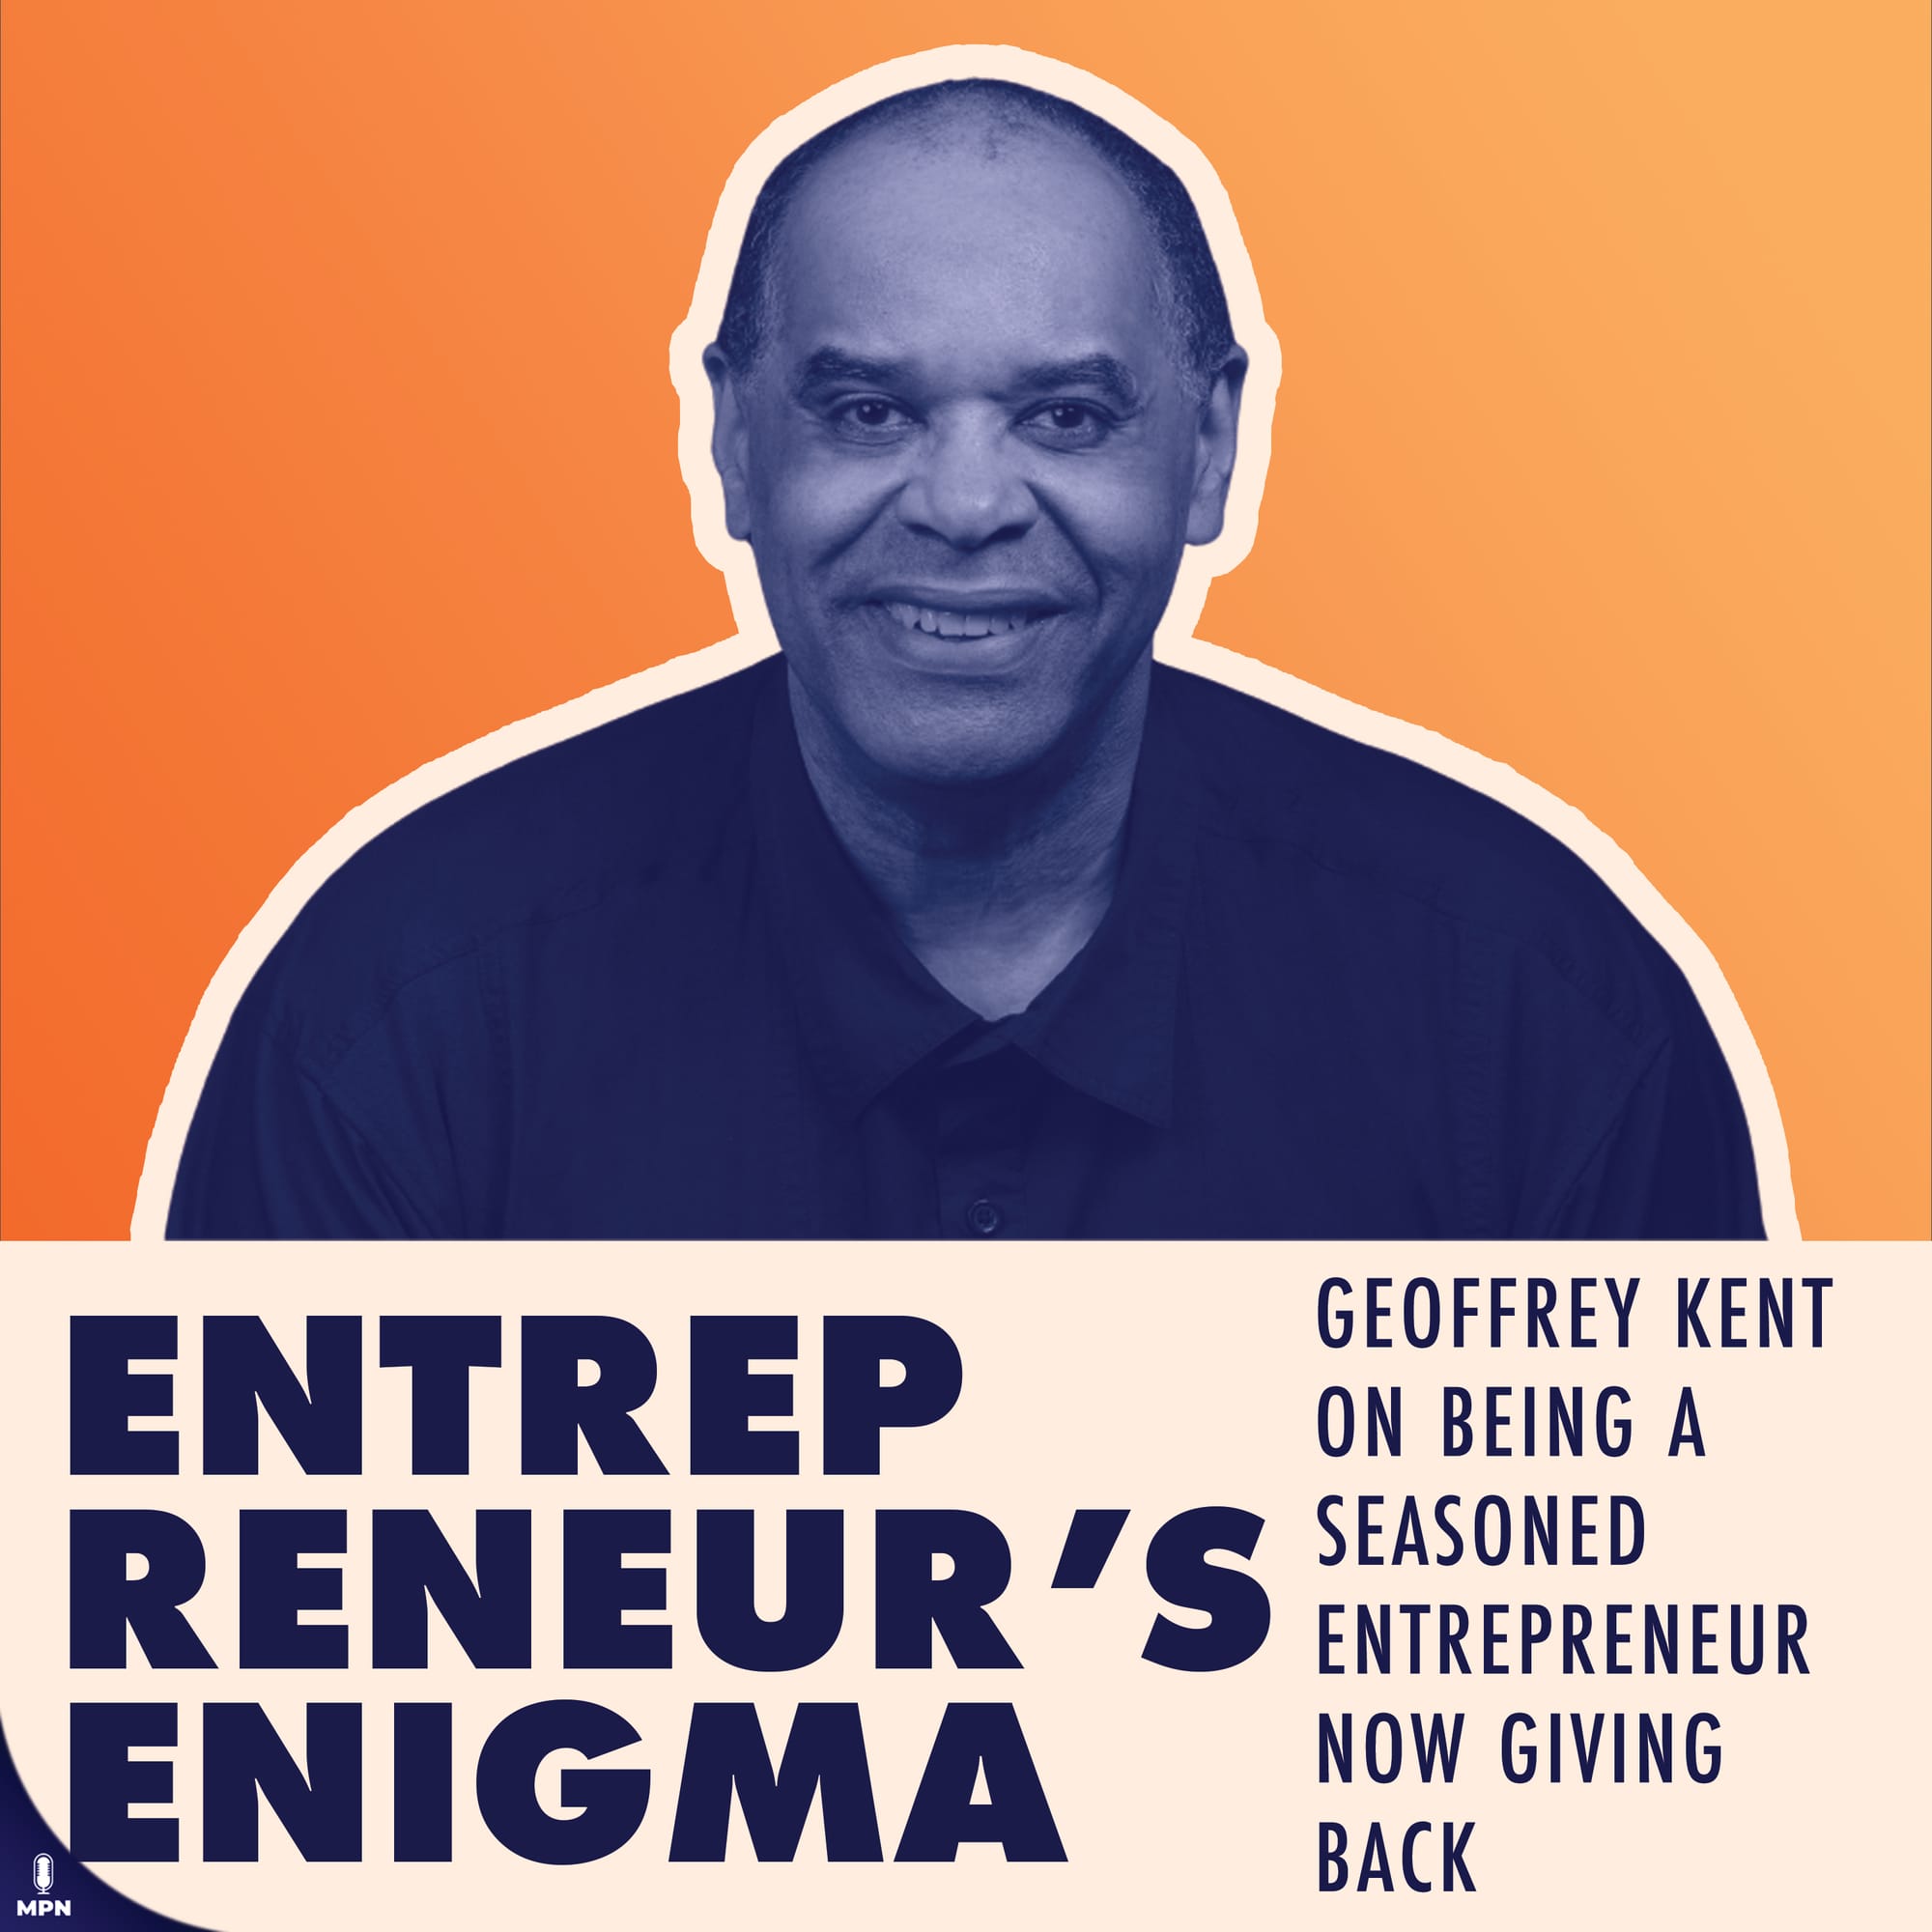 Geoffrey Kent on Entrepreneur's Enigma podcast Album Art: "Geoffrey Kent on being a seasoned entrepreneur now giving back."